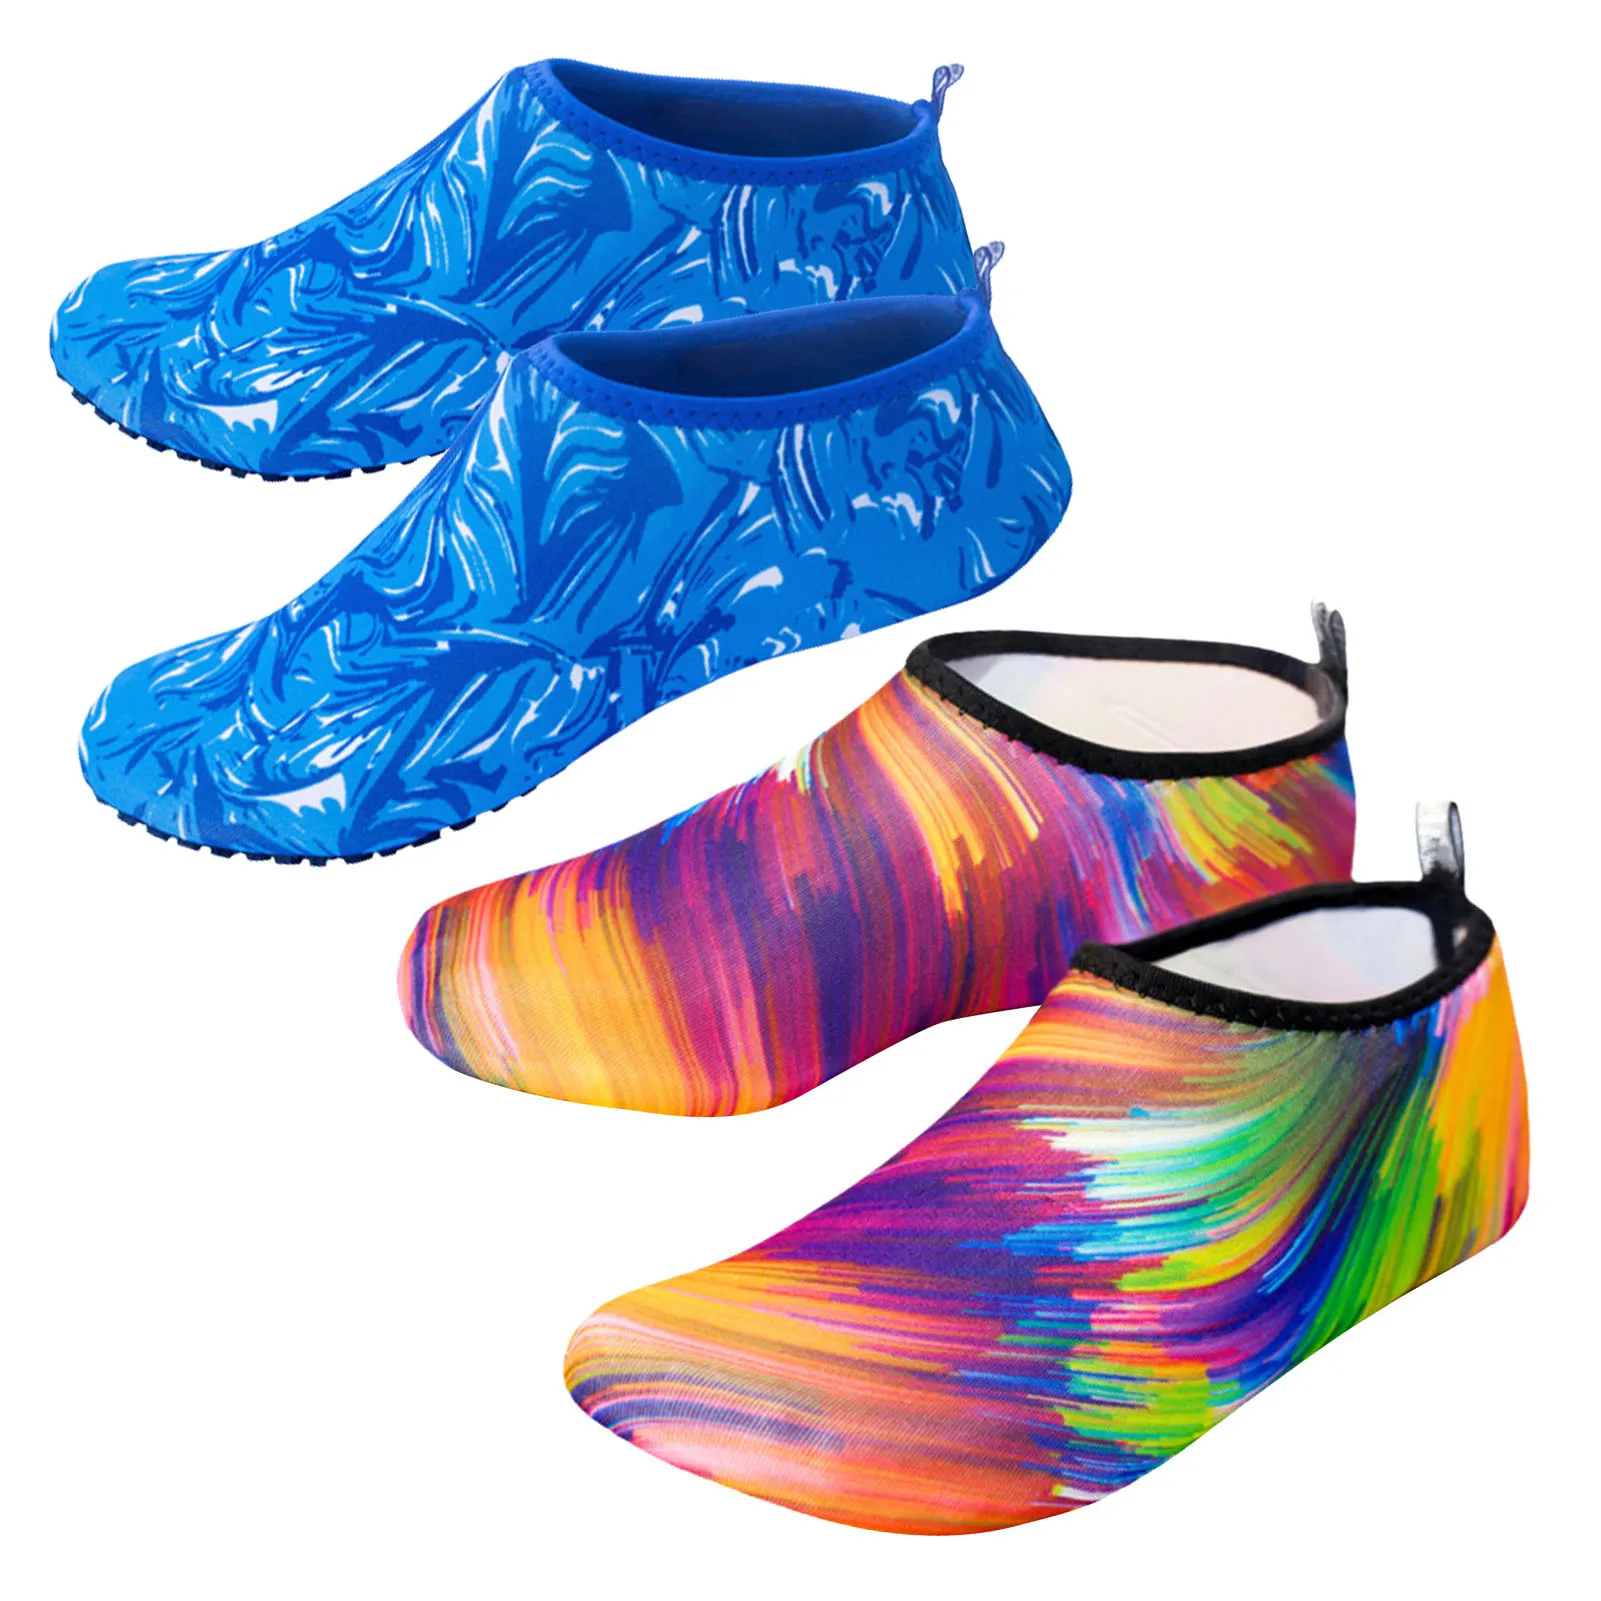 

Unisex Adults Kids Diving Sock Barefoot Water Sport Shoes Aqua Sock Snorkeling Seaside Swimming Non-slip Anti-skid Yoga Shoe